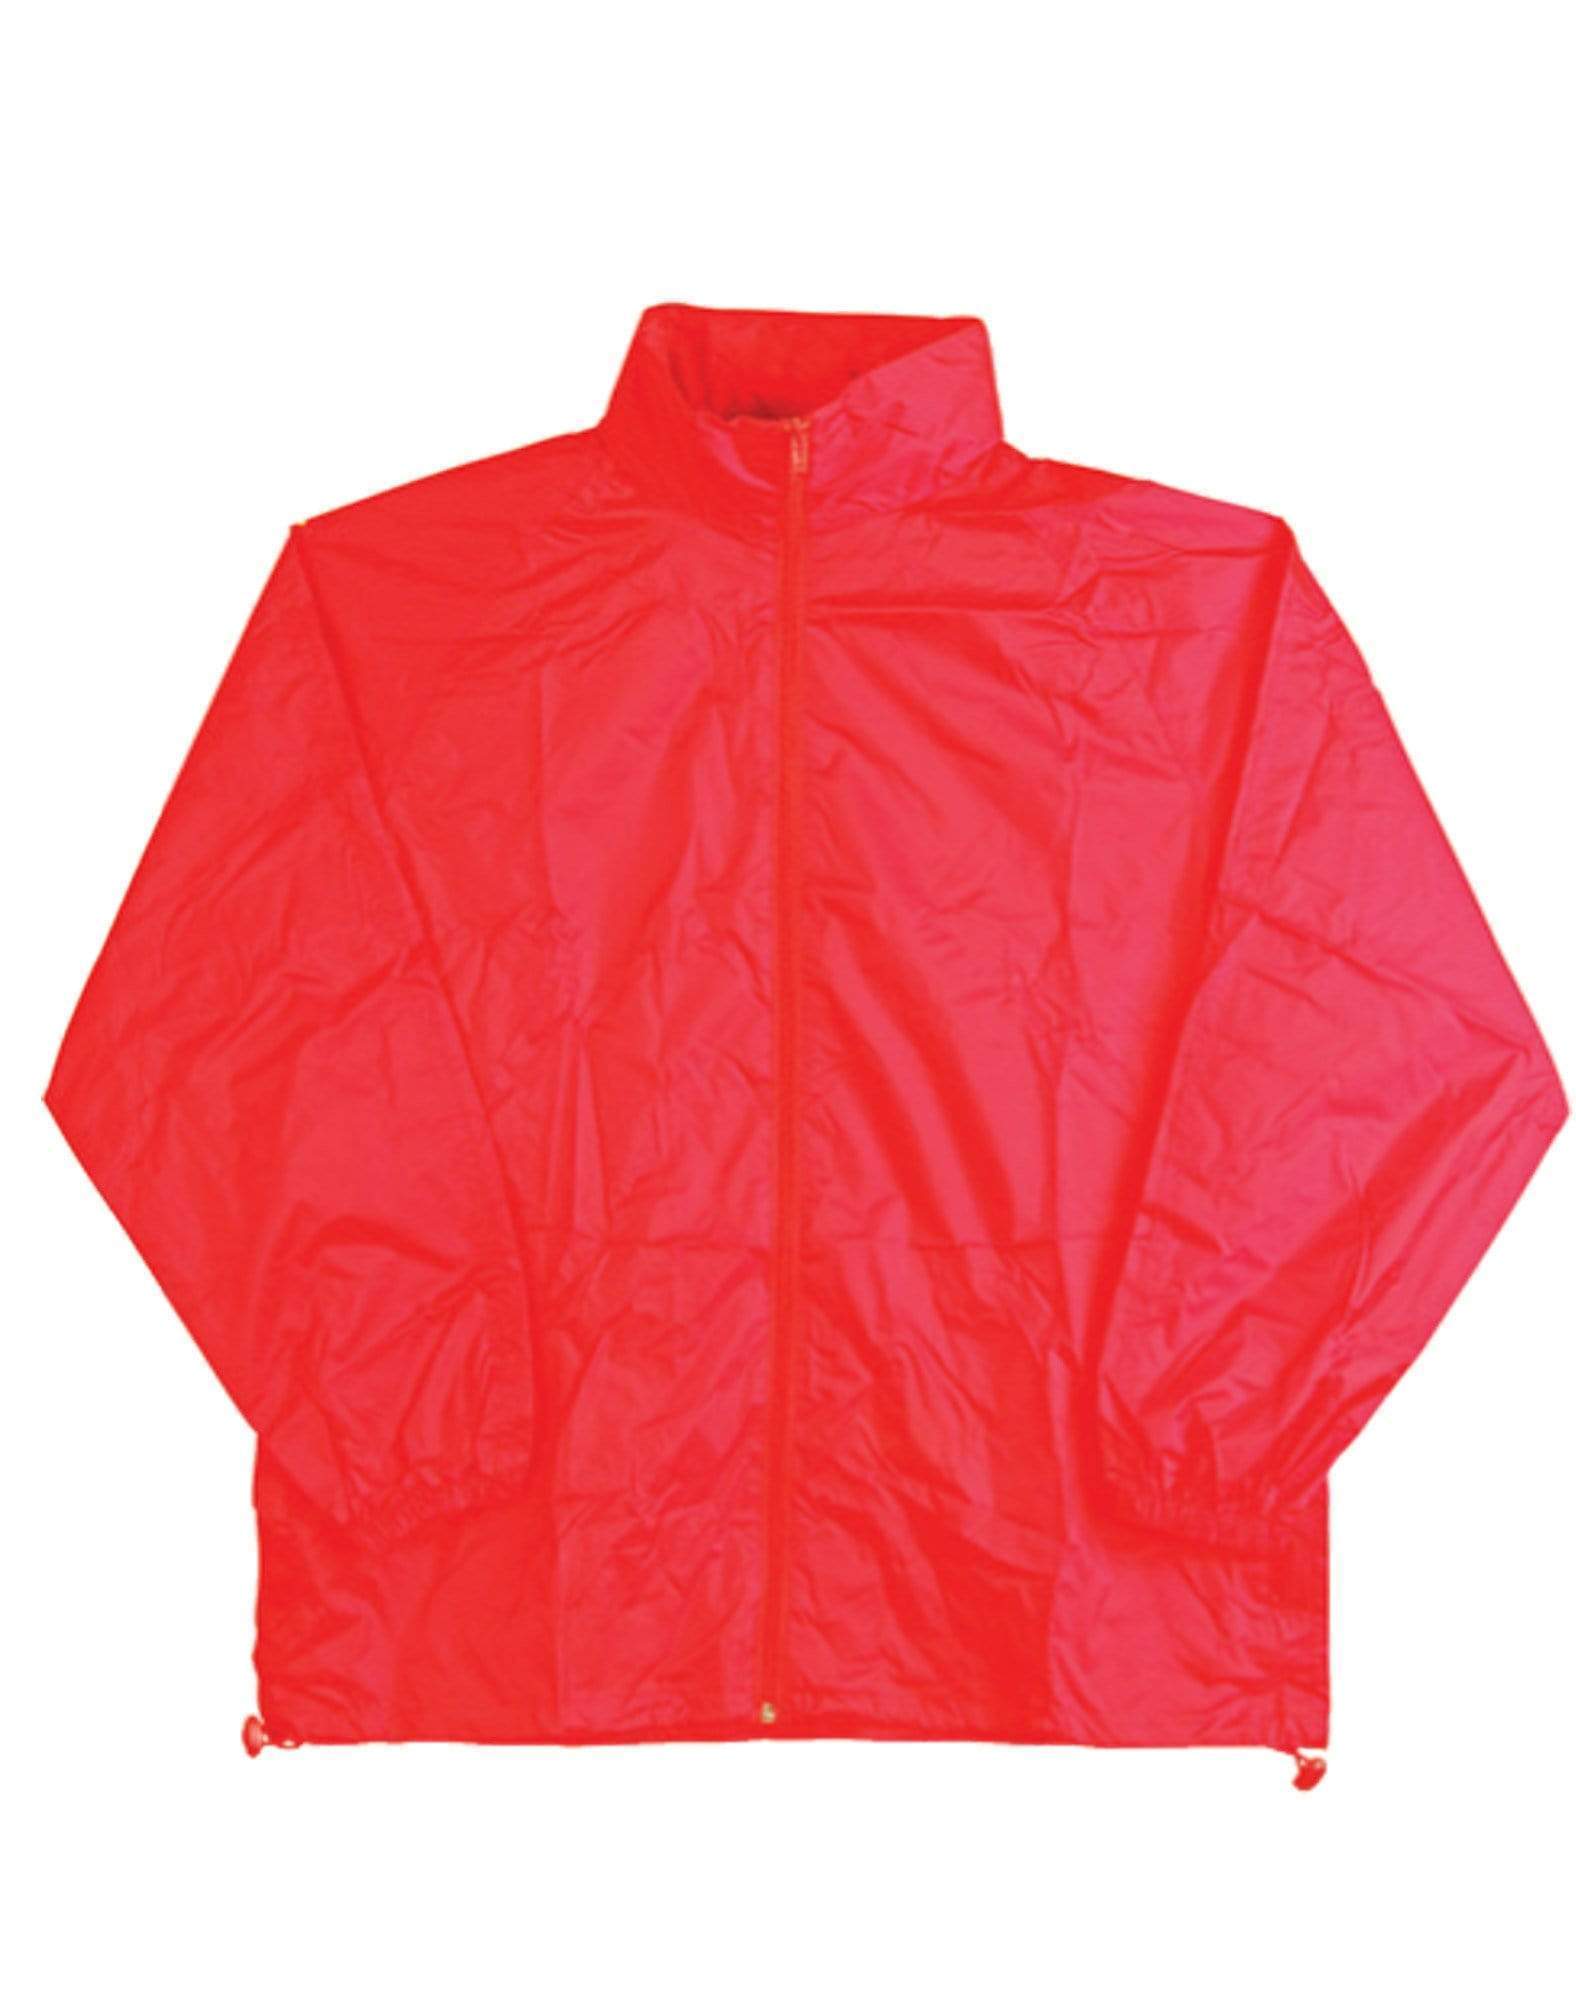 WINNING SPIRIT RAIN FOREST Spray Jacket Kid's JK10K Casual Wear Winning Spirit Red 4K 